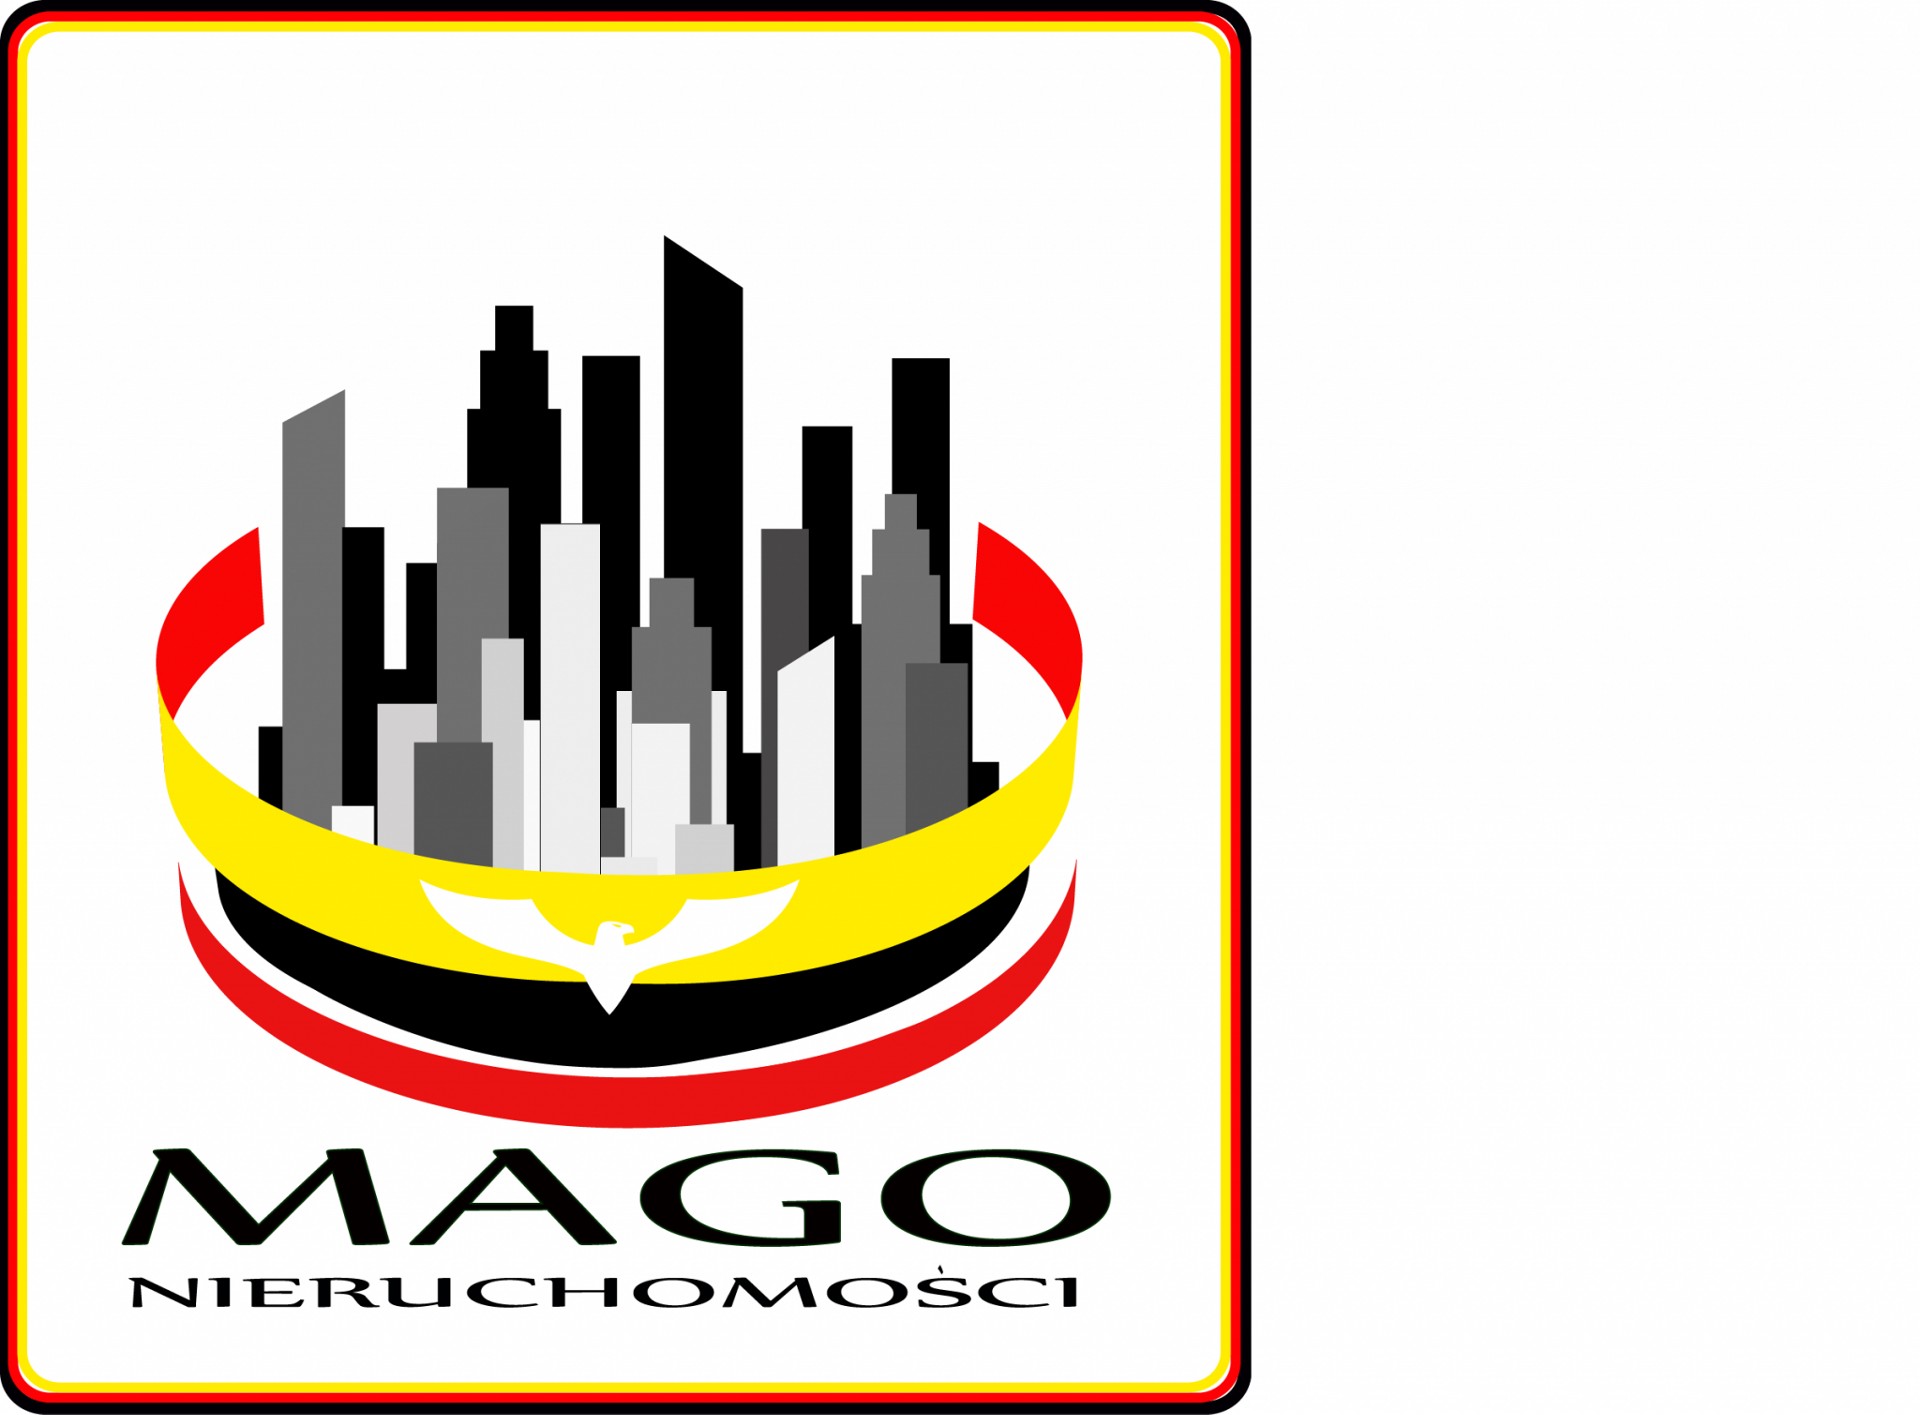 Nieruchomości MAGO Małgorzata Rudek logo